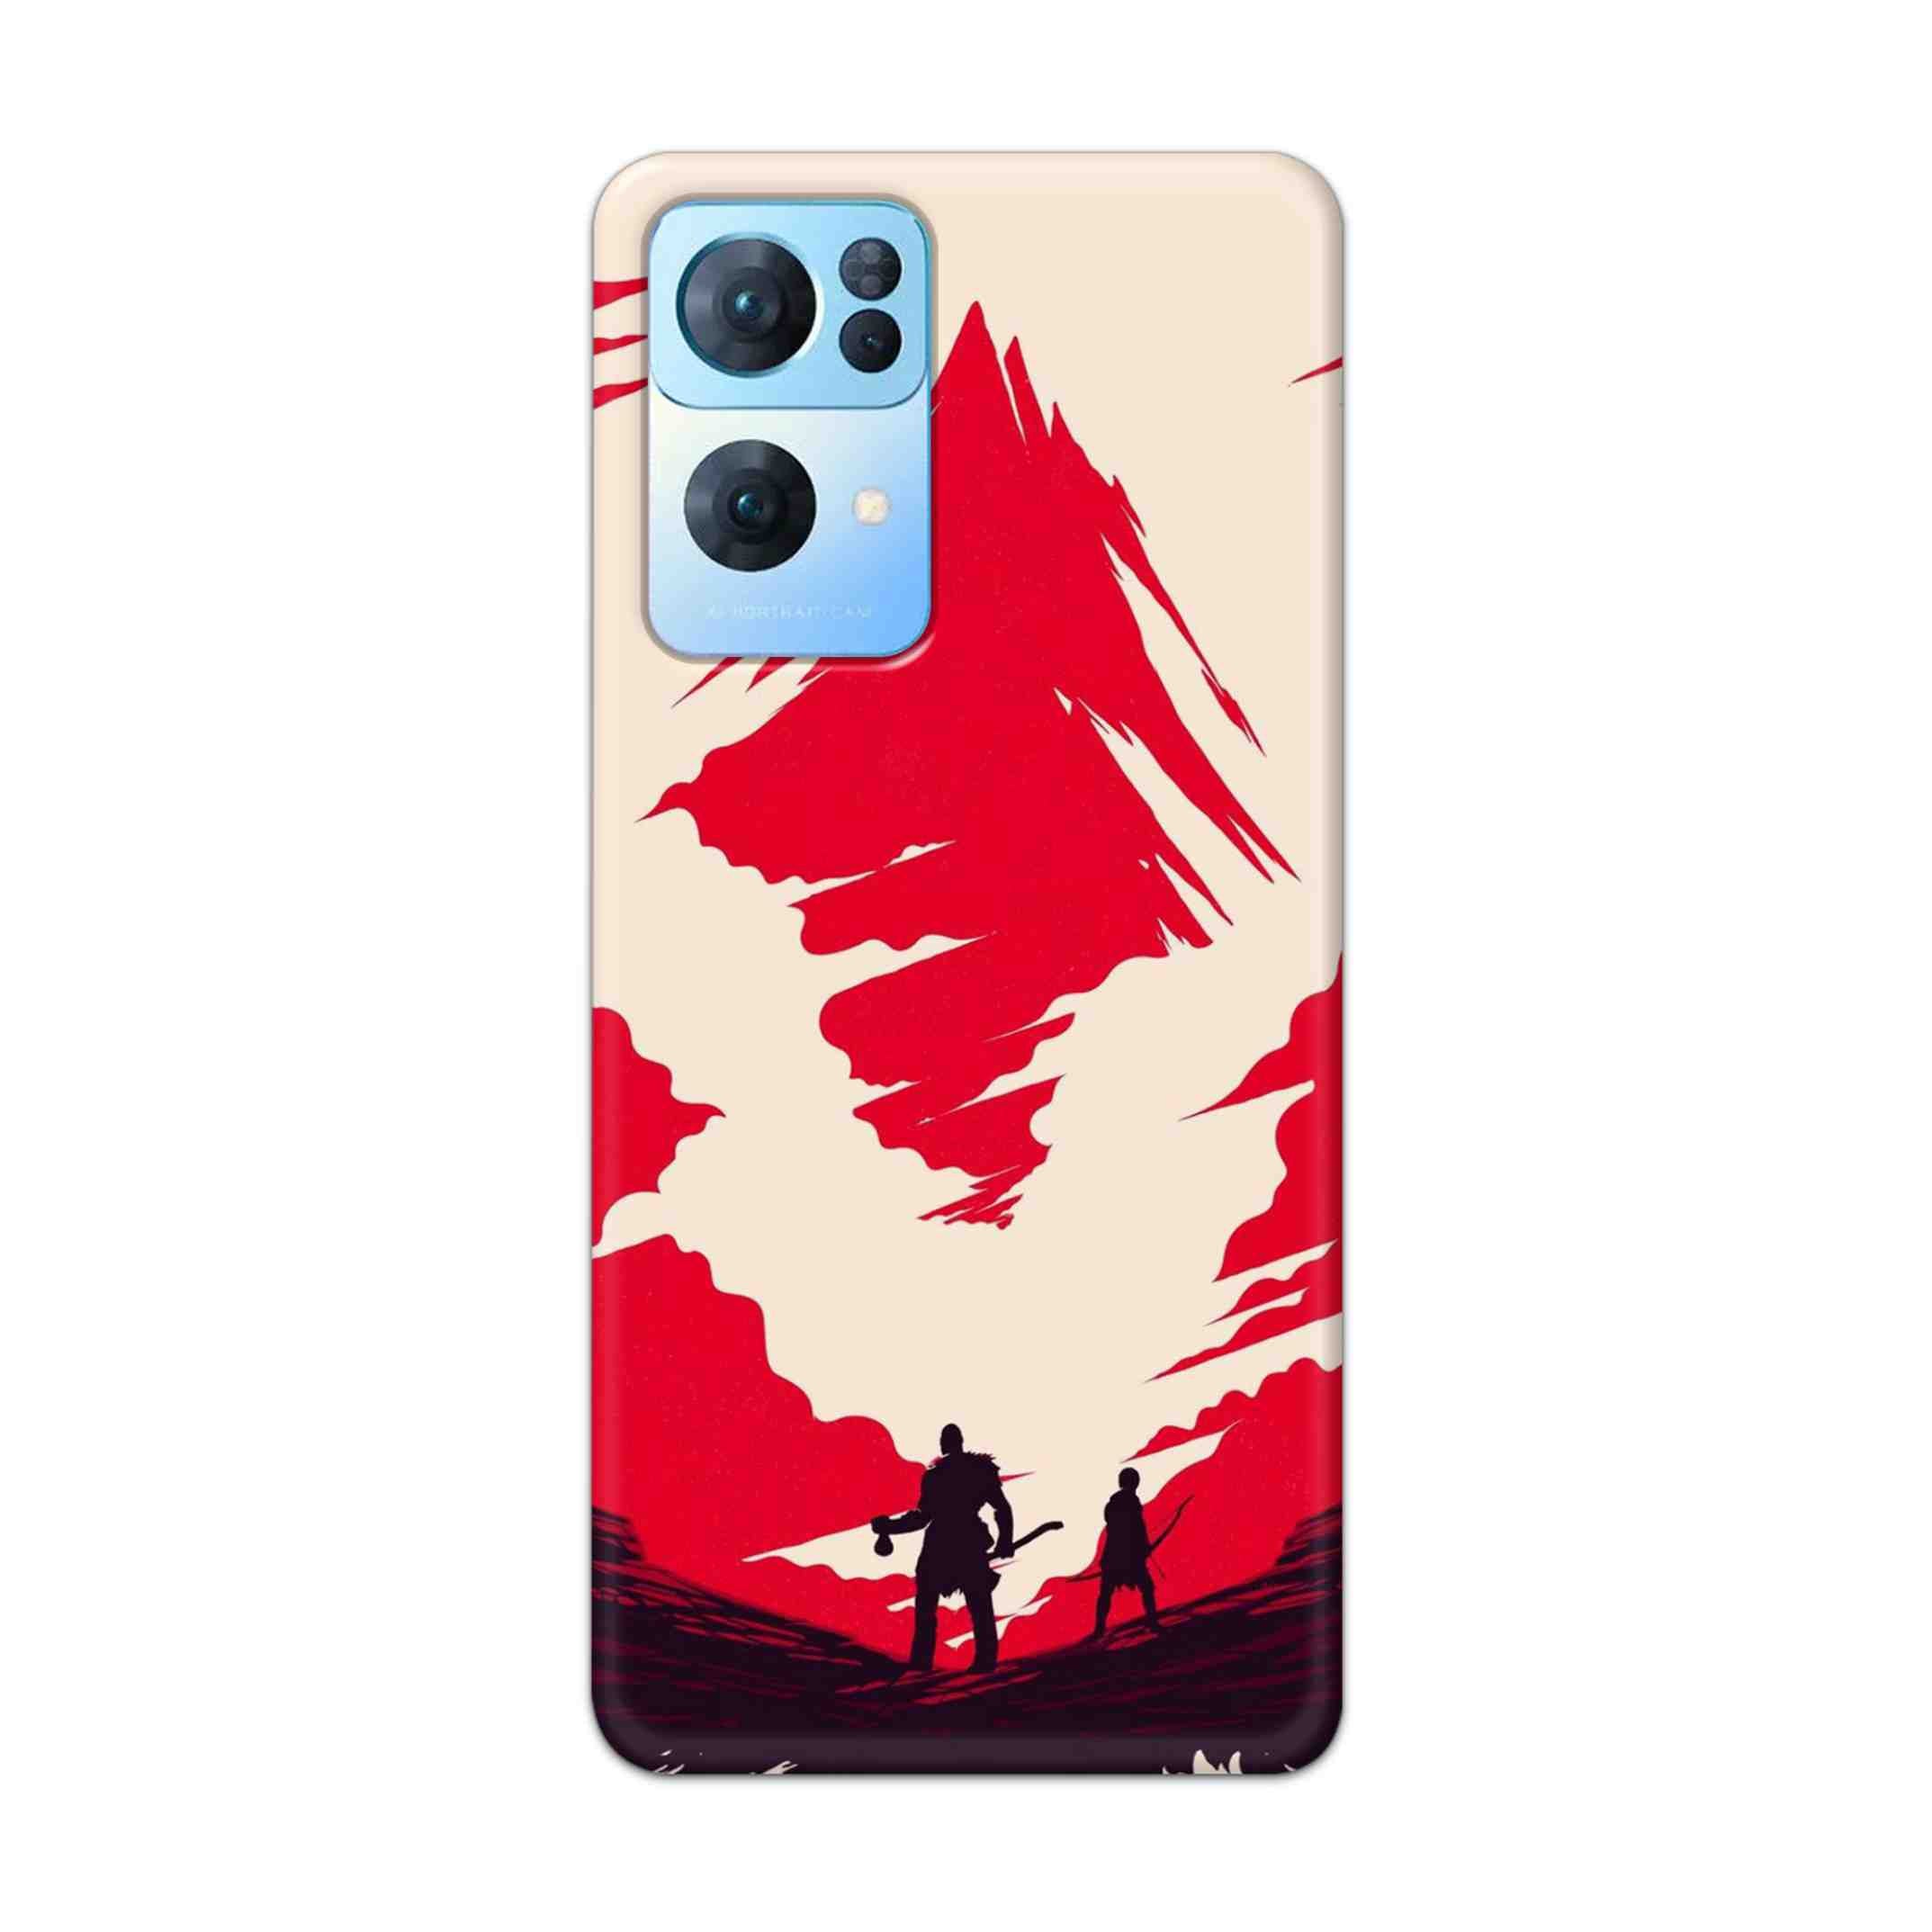 Buy God Of War Art Hard Back Mobile Phone Case Cover For Oppo Reno 7 Pro Online